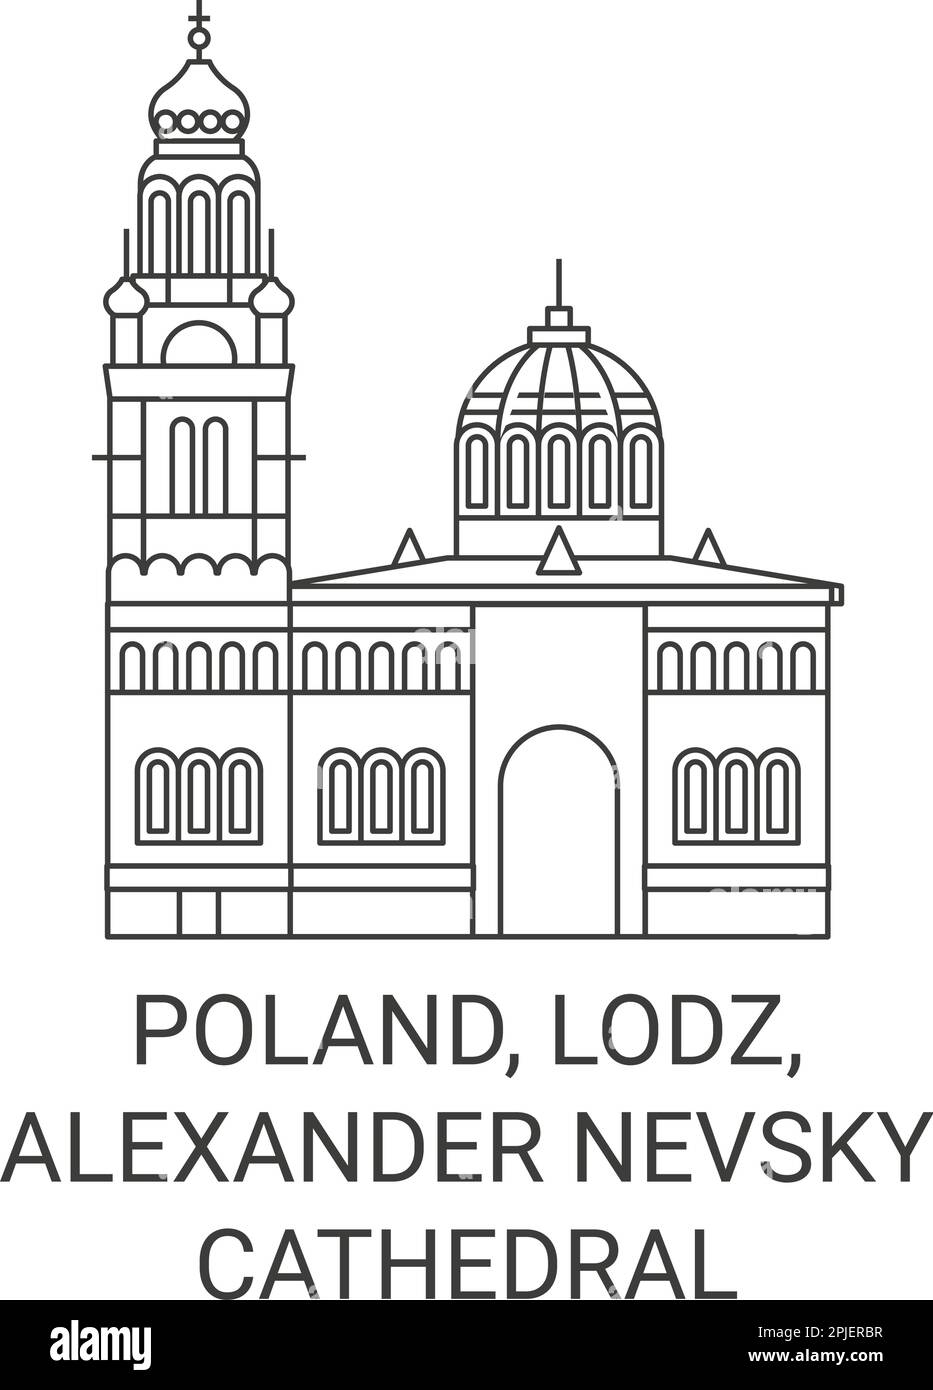 Poland, Lodz, Alexander Nevsky Cathedral travel landmark vector illustration Stock Vector